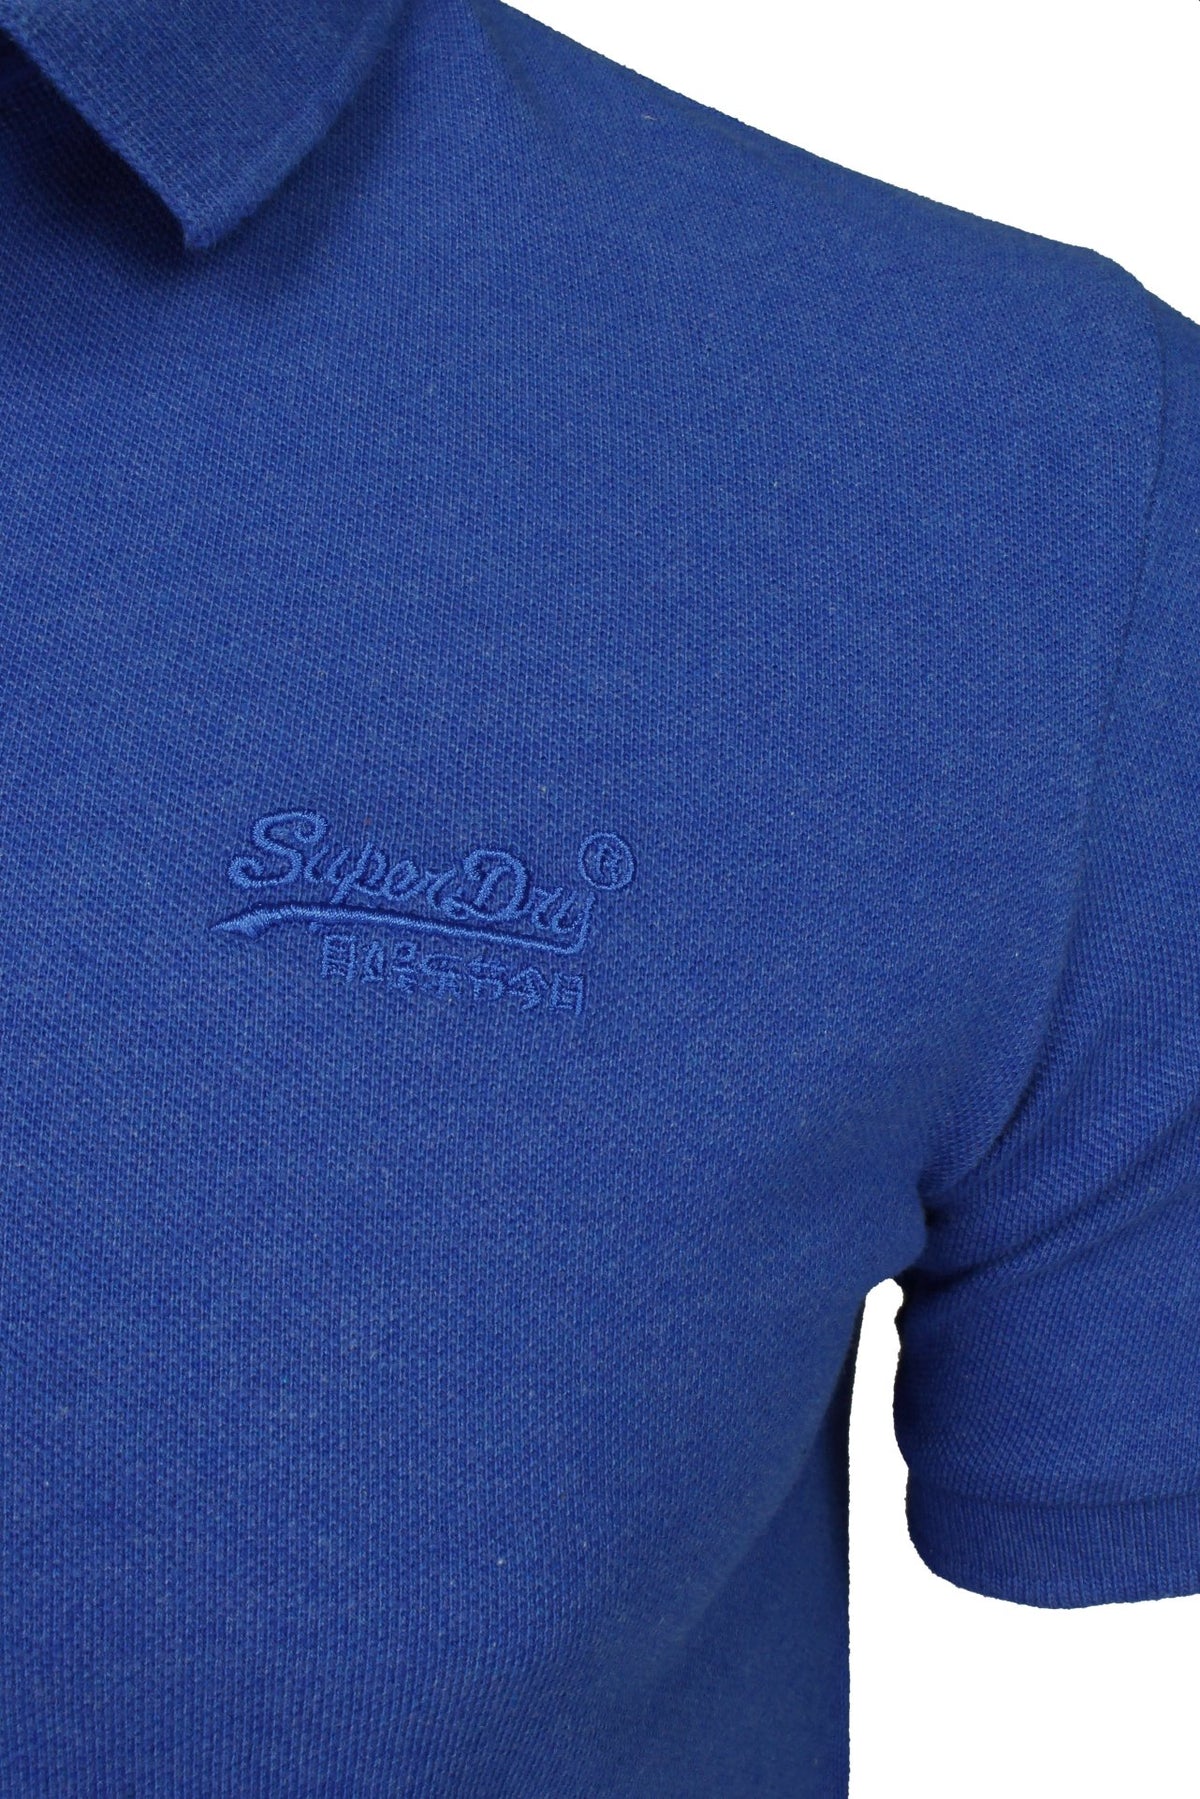 Superdry Polo Shirt 'Classic Pique Polo' Short Sleeve, 02, M1110247A, Varsity Blue Marl